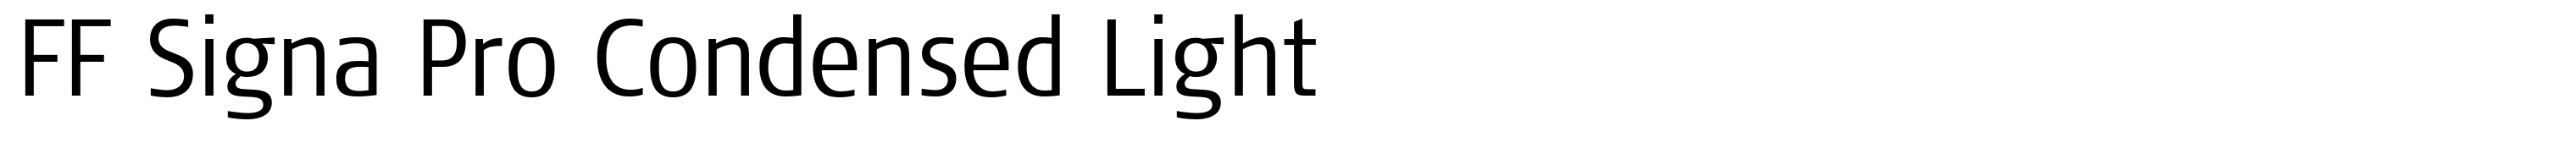 FF Signa Pro Condensed Light